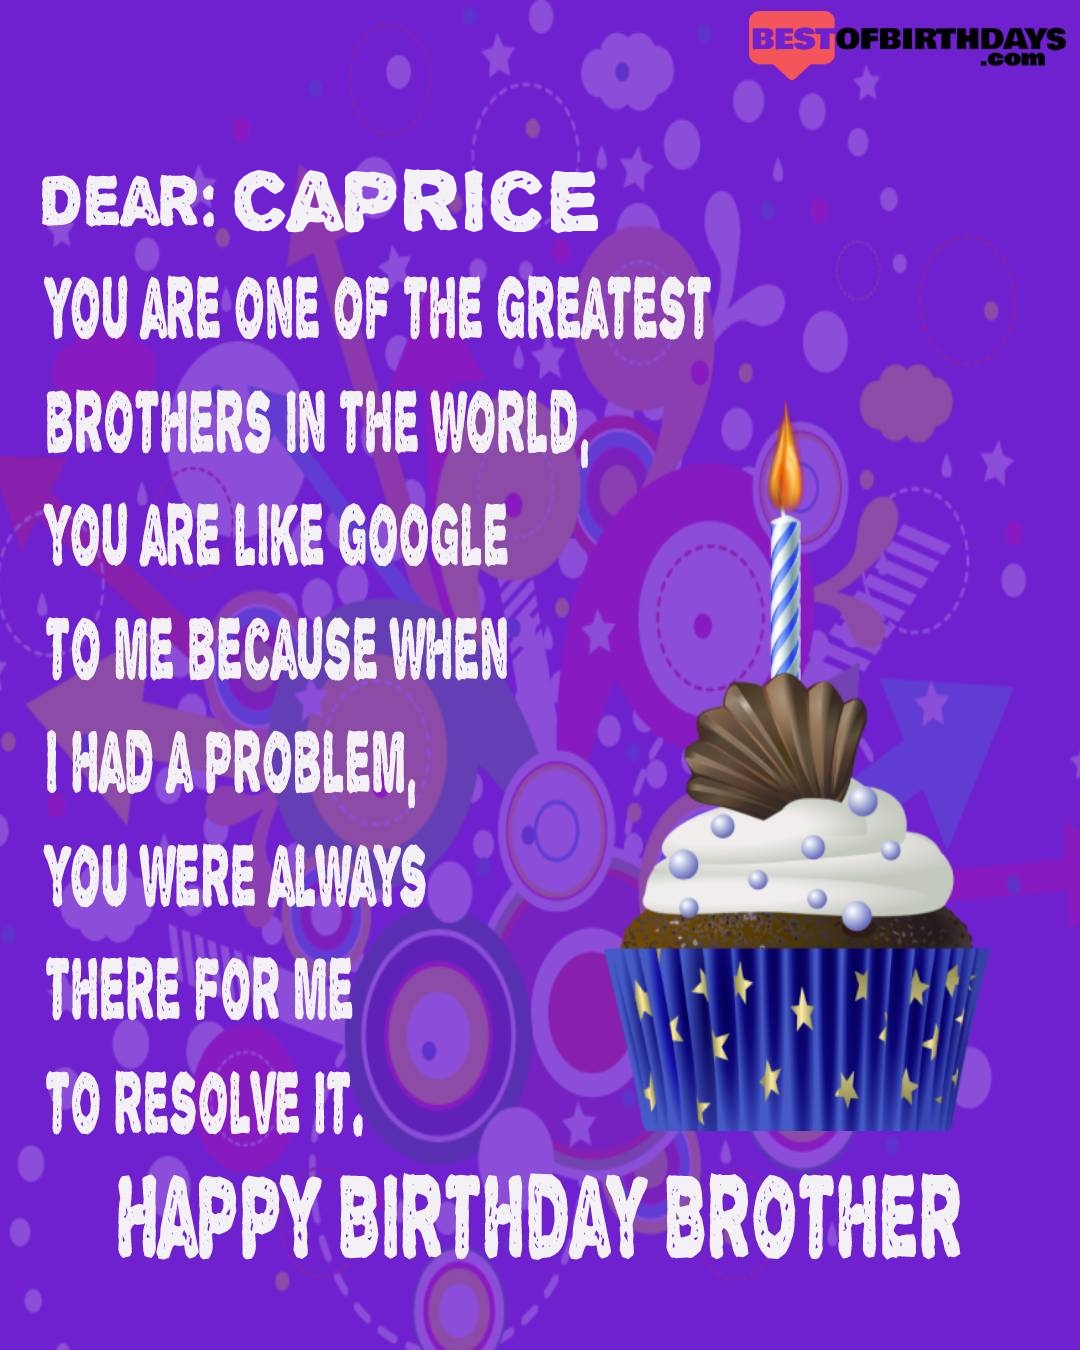 Happy birthday caprice bhai brother bro